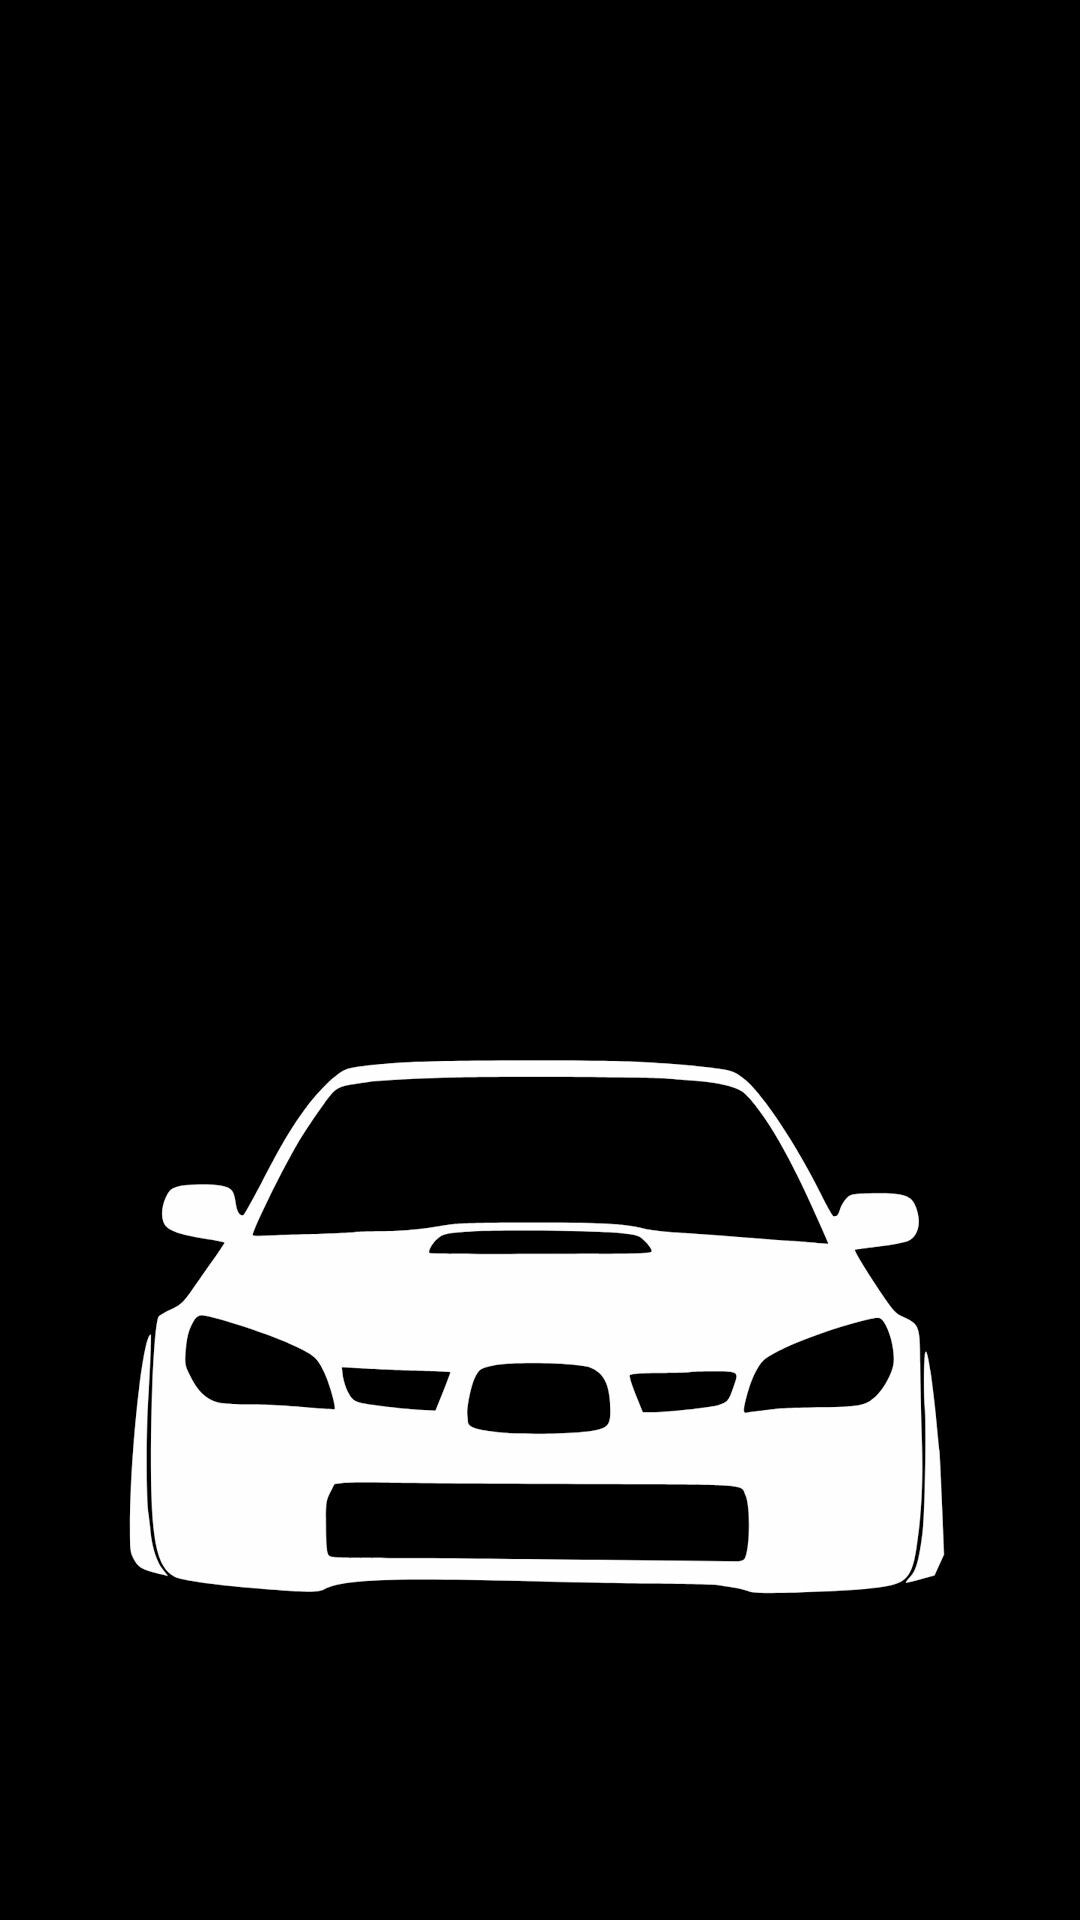 Subaru: Black and white, Minimalistic, WRX, Art. 1080x1920 Full HD Wallpaper.